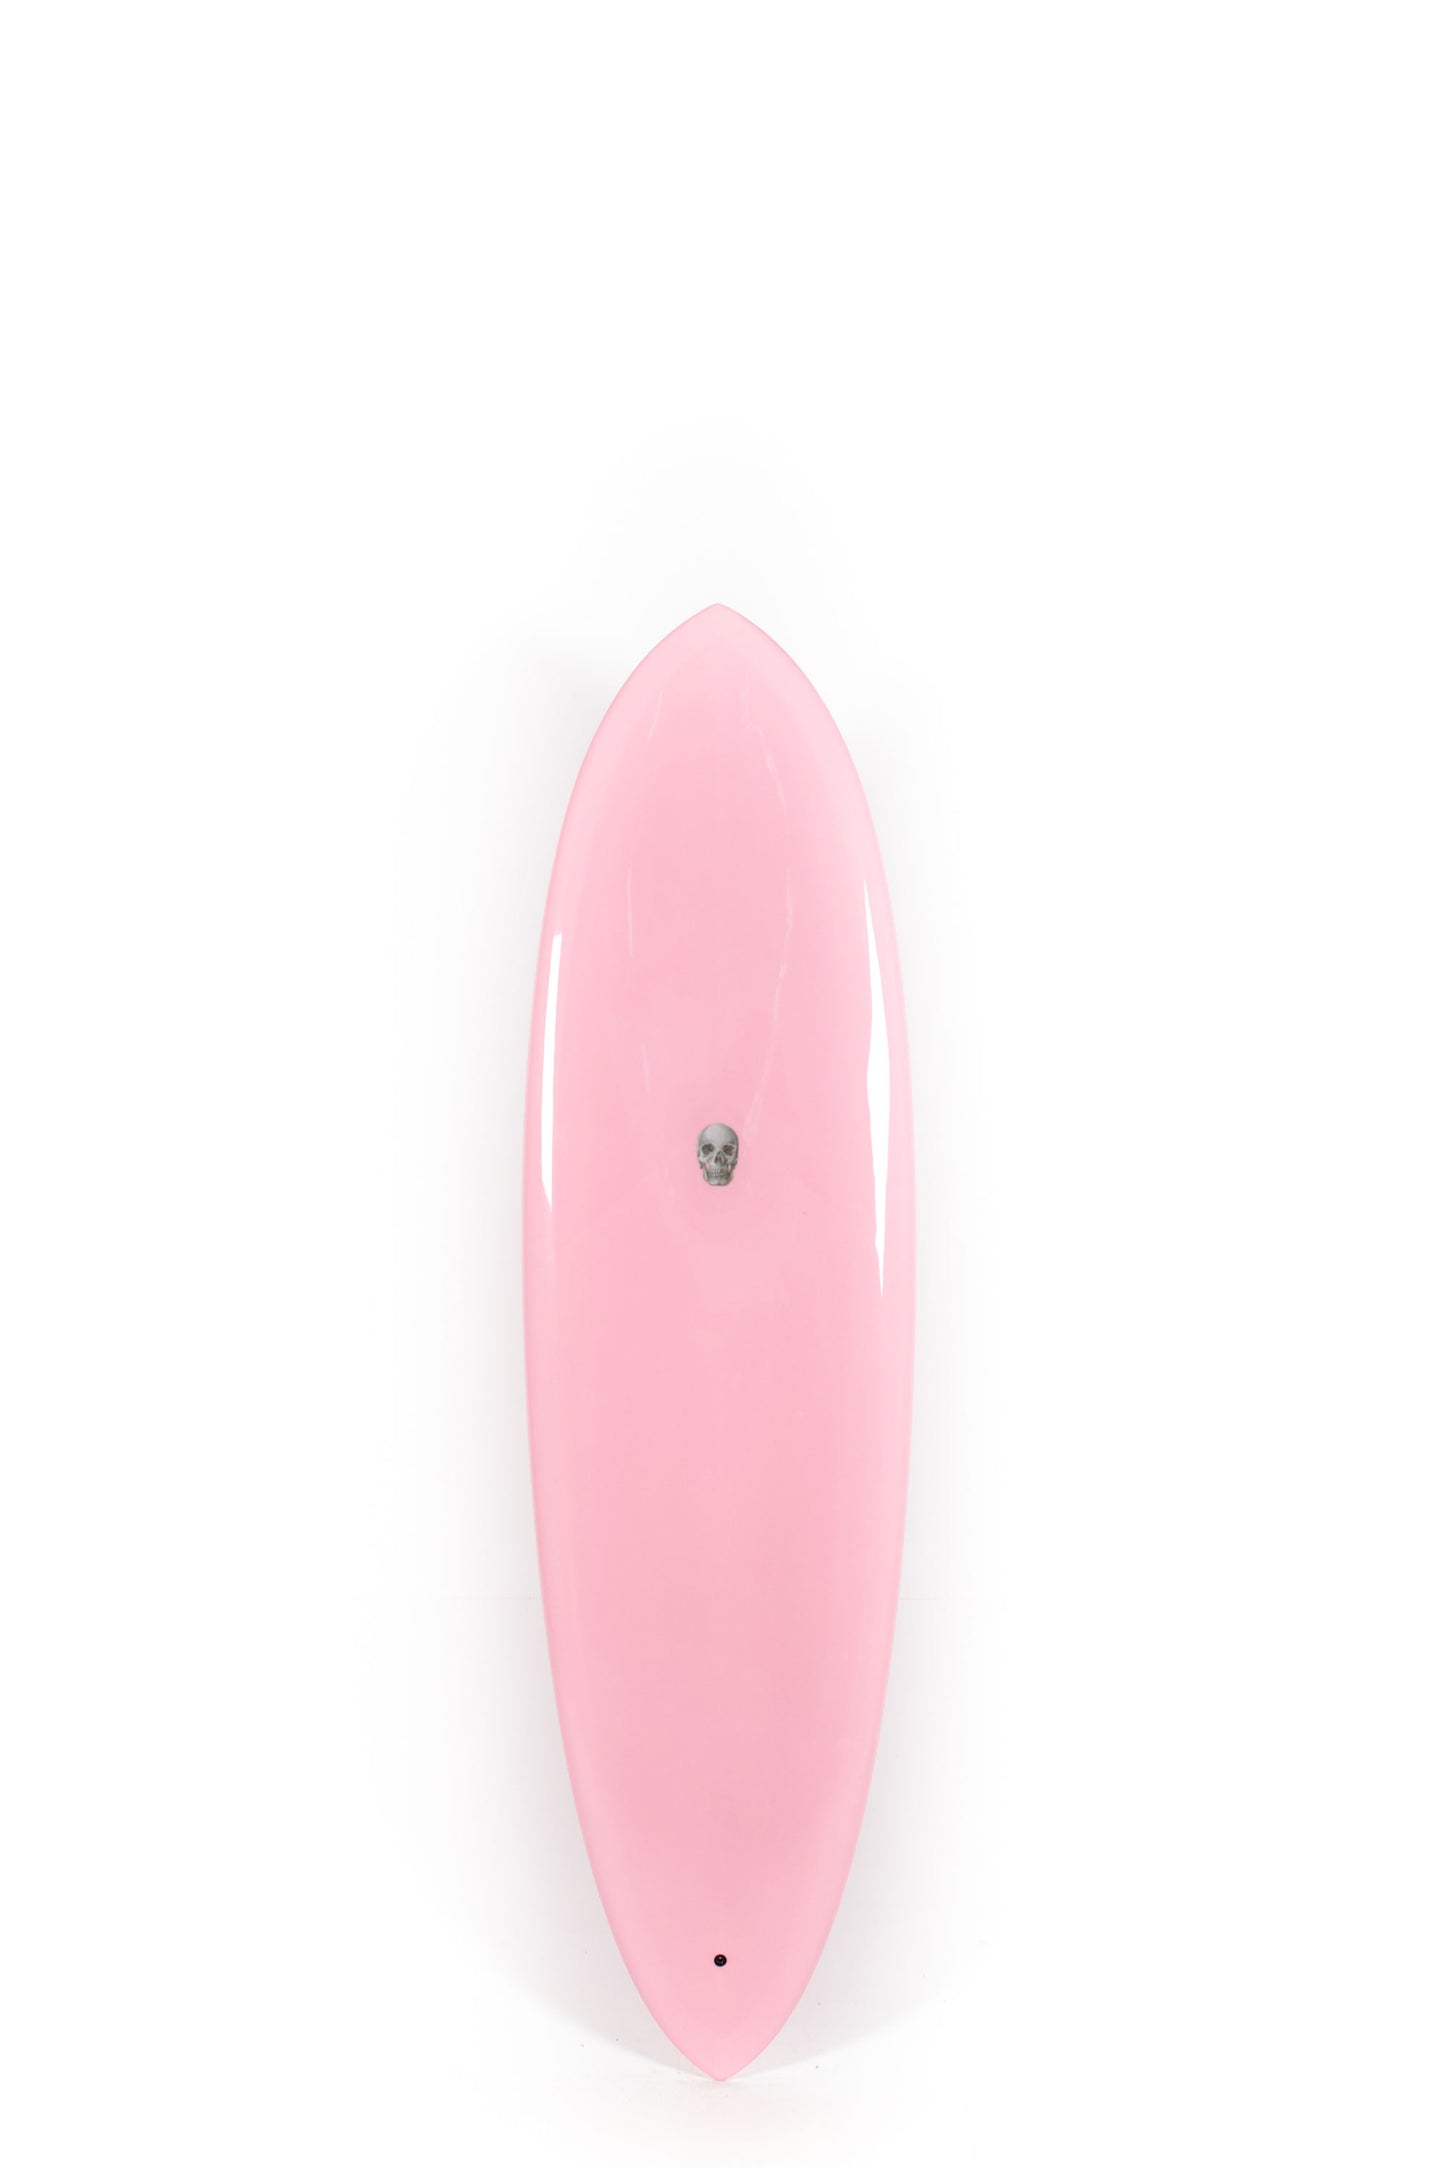 Pukas Surf Shop - Christenson Surfboards - C-BUCKET - 6'6" x 21 x 2 5/8 - CX05011